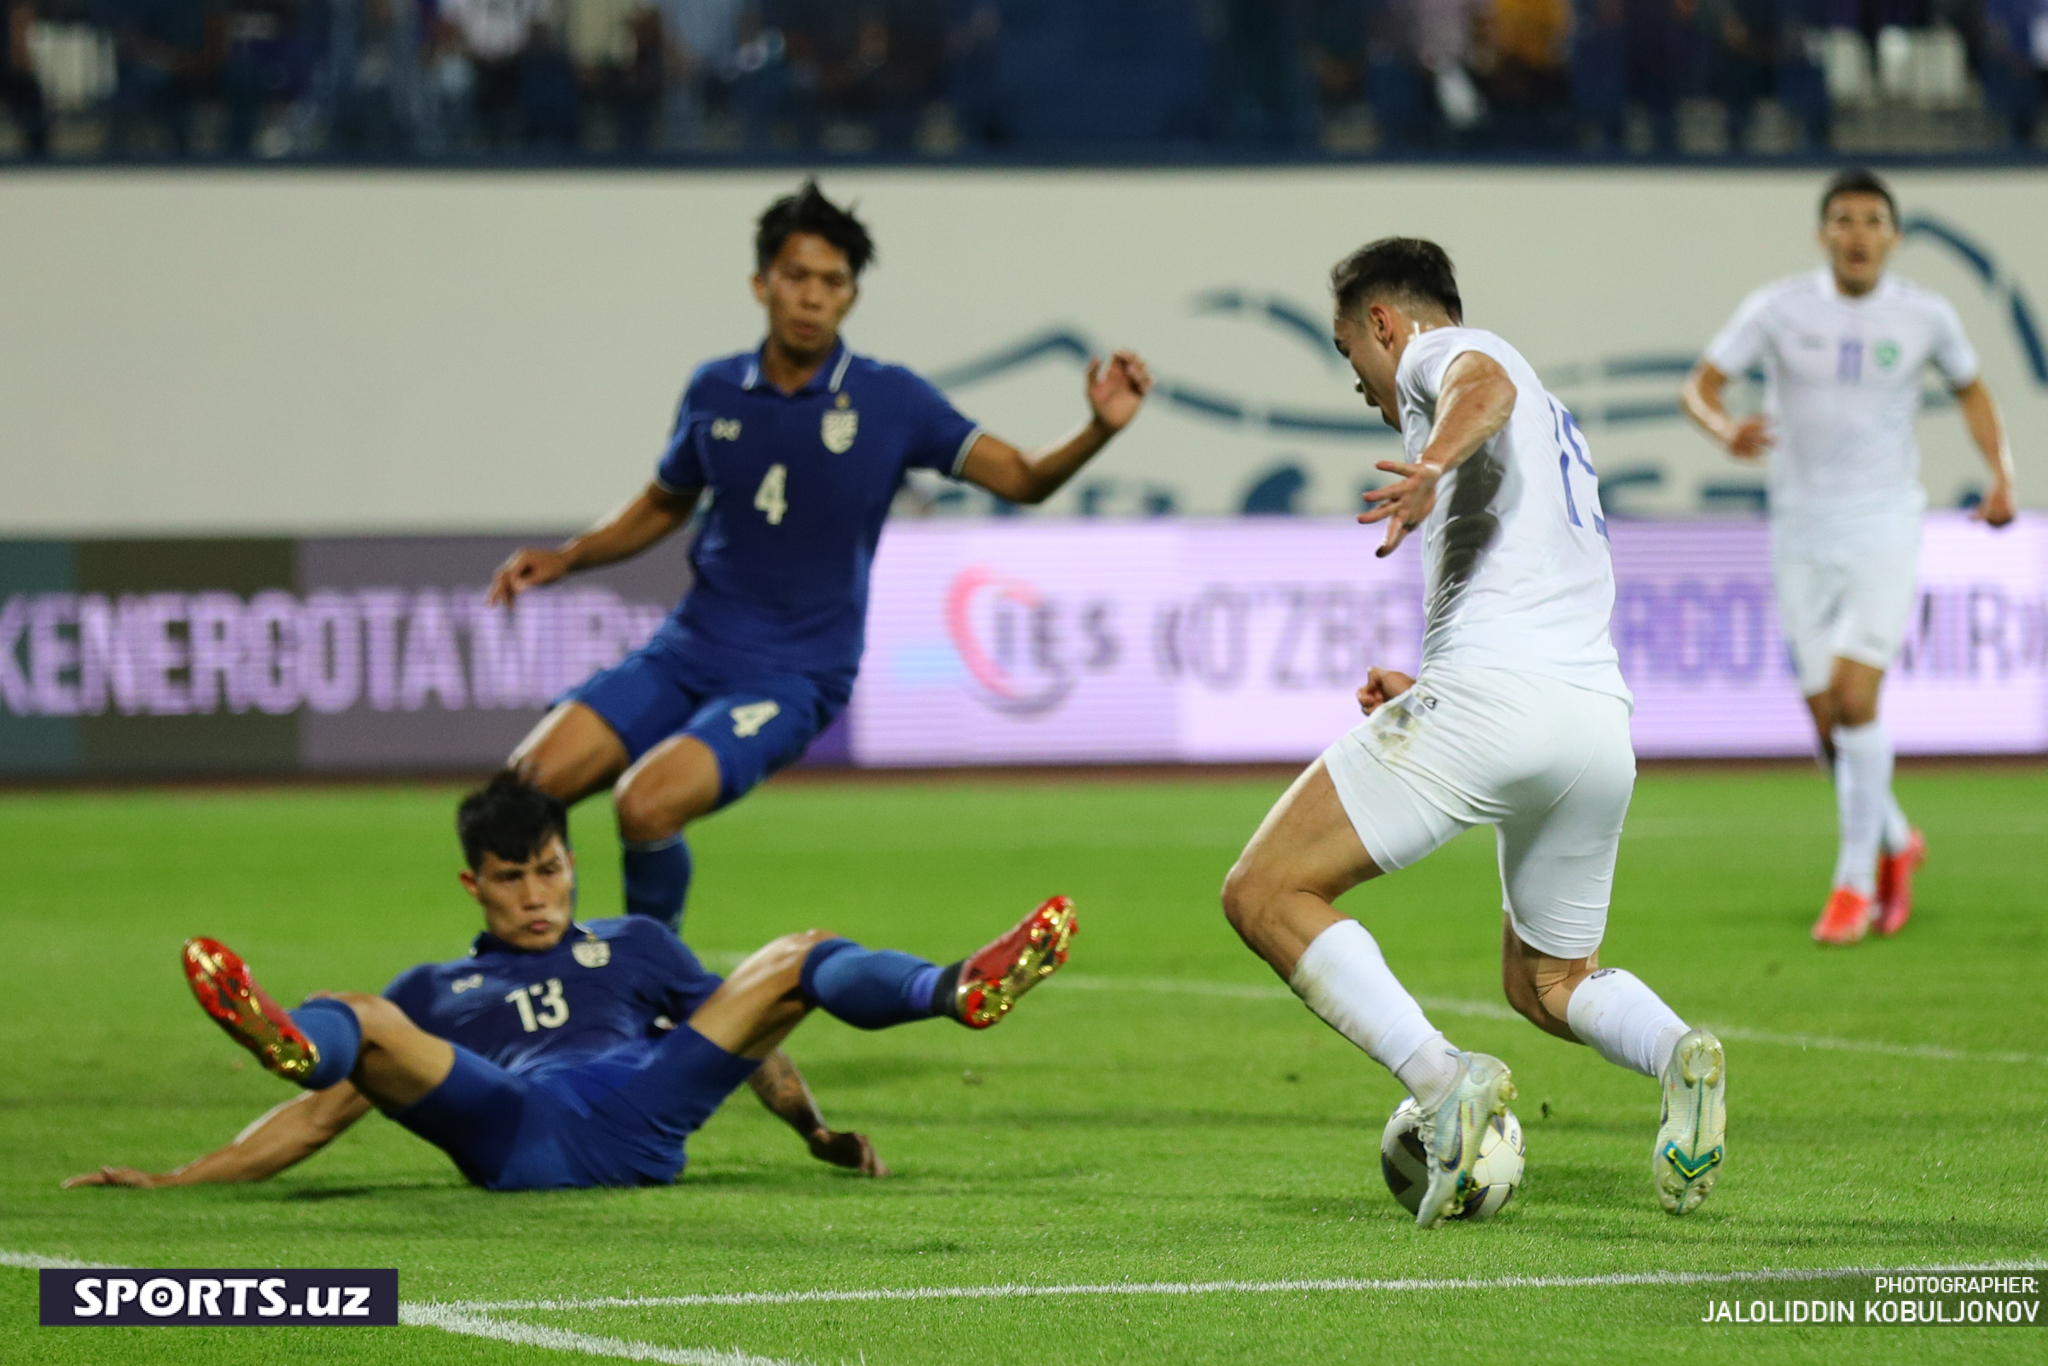 Uzbekistan - Thailand full match 14/6/2022